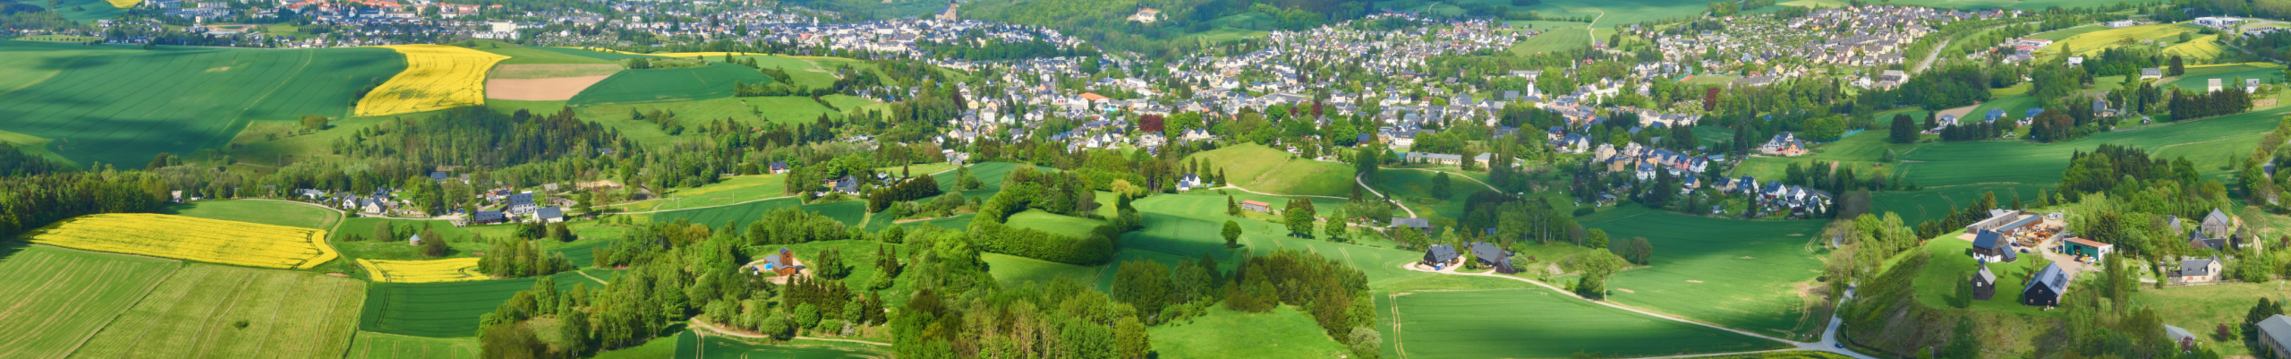 schneeberg panorama lorenz ©Herr Lorenz